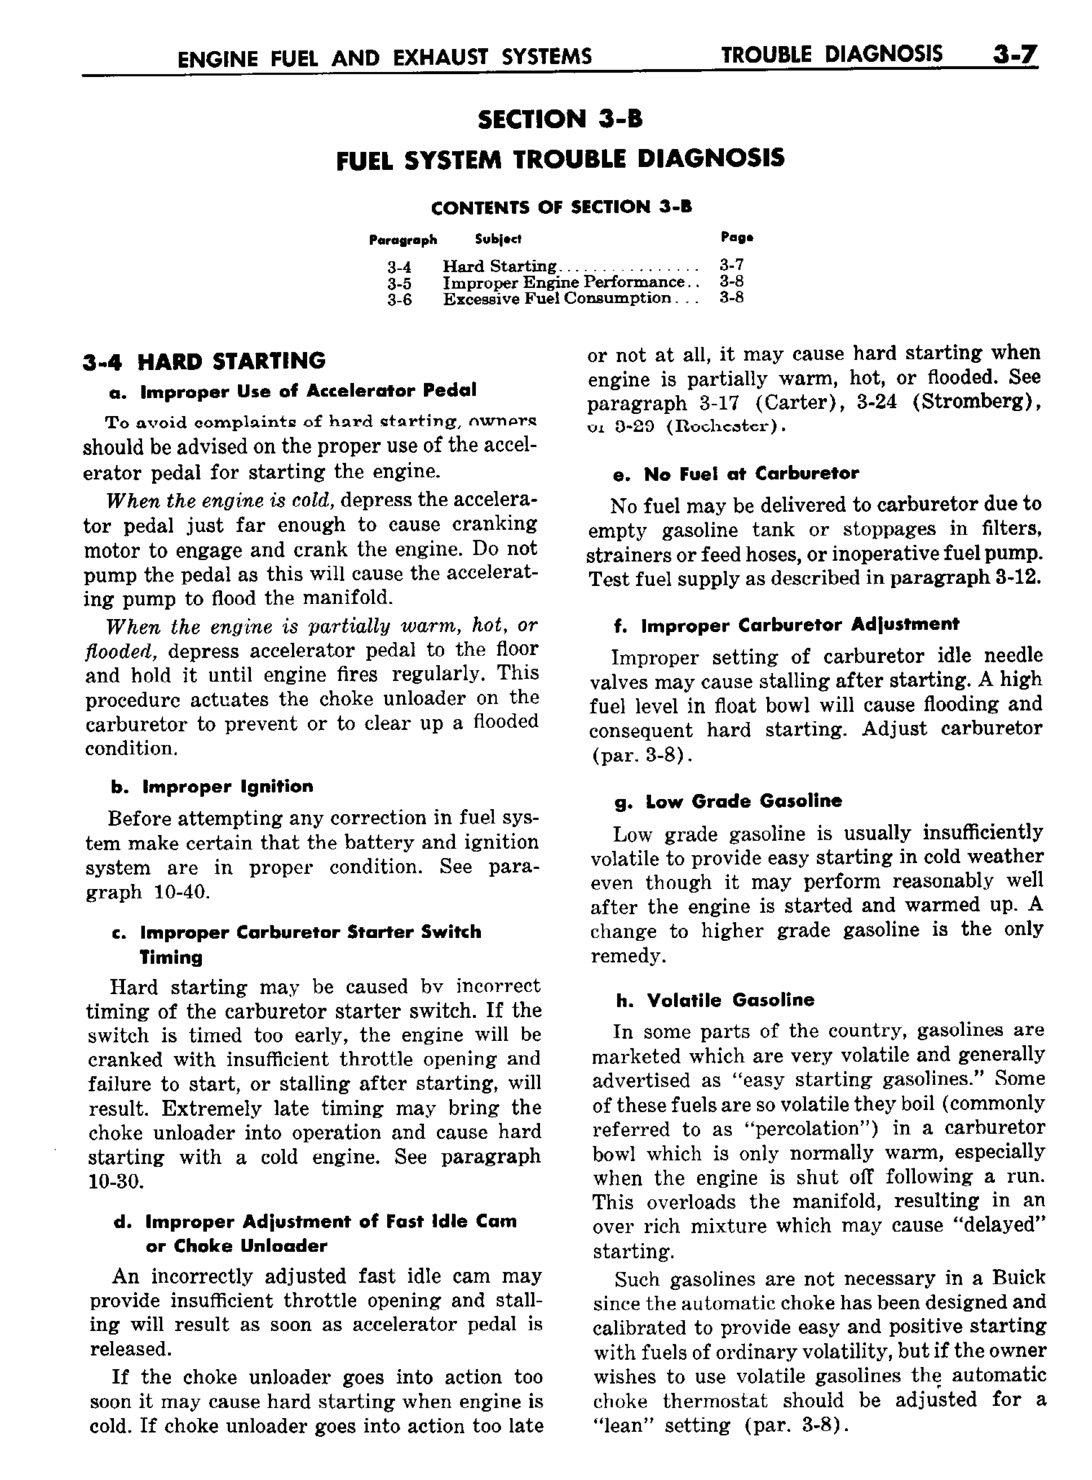 n_04 1959 Buick Shop Manual - Engine Fuel & Exhaust-007-007.jpg